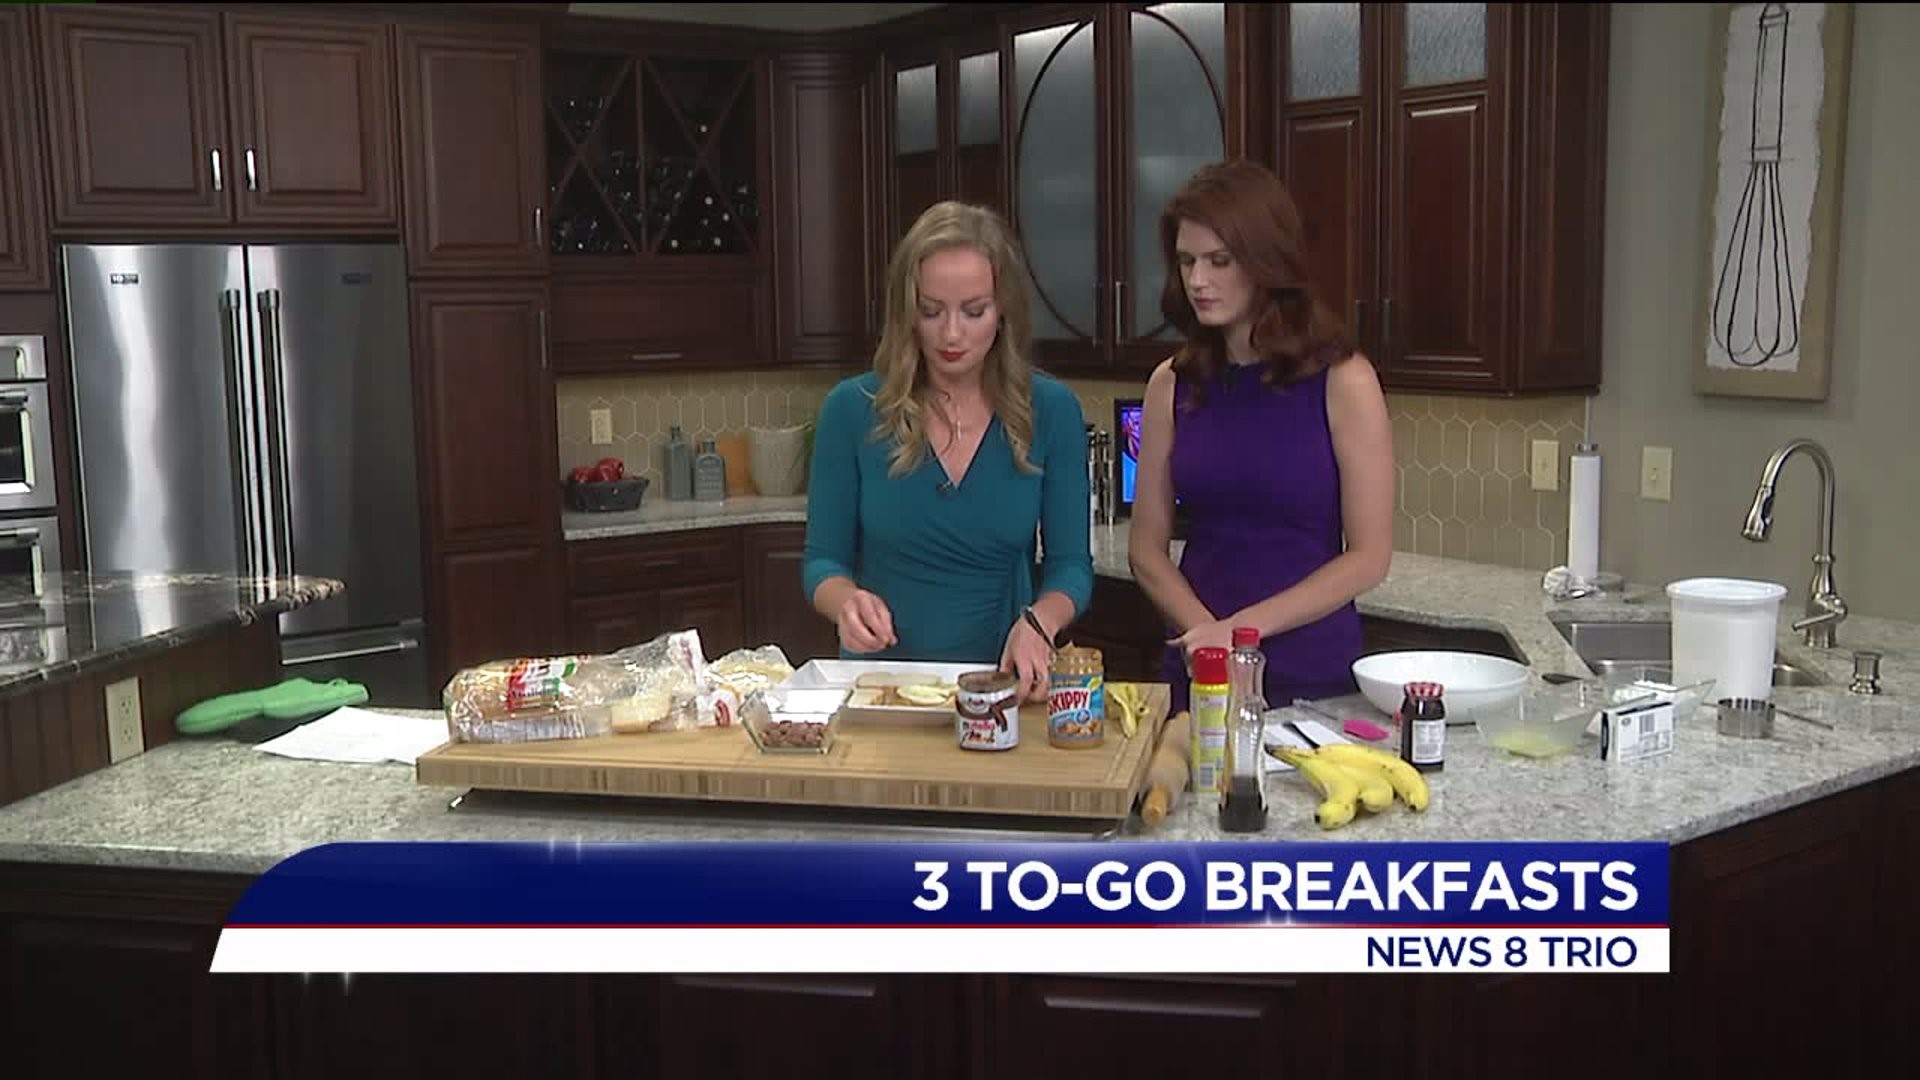 News 8 Trio: To-go breakfasts Pt. 1